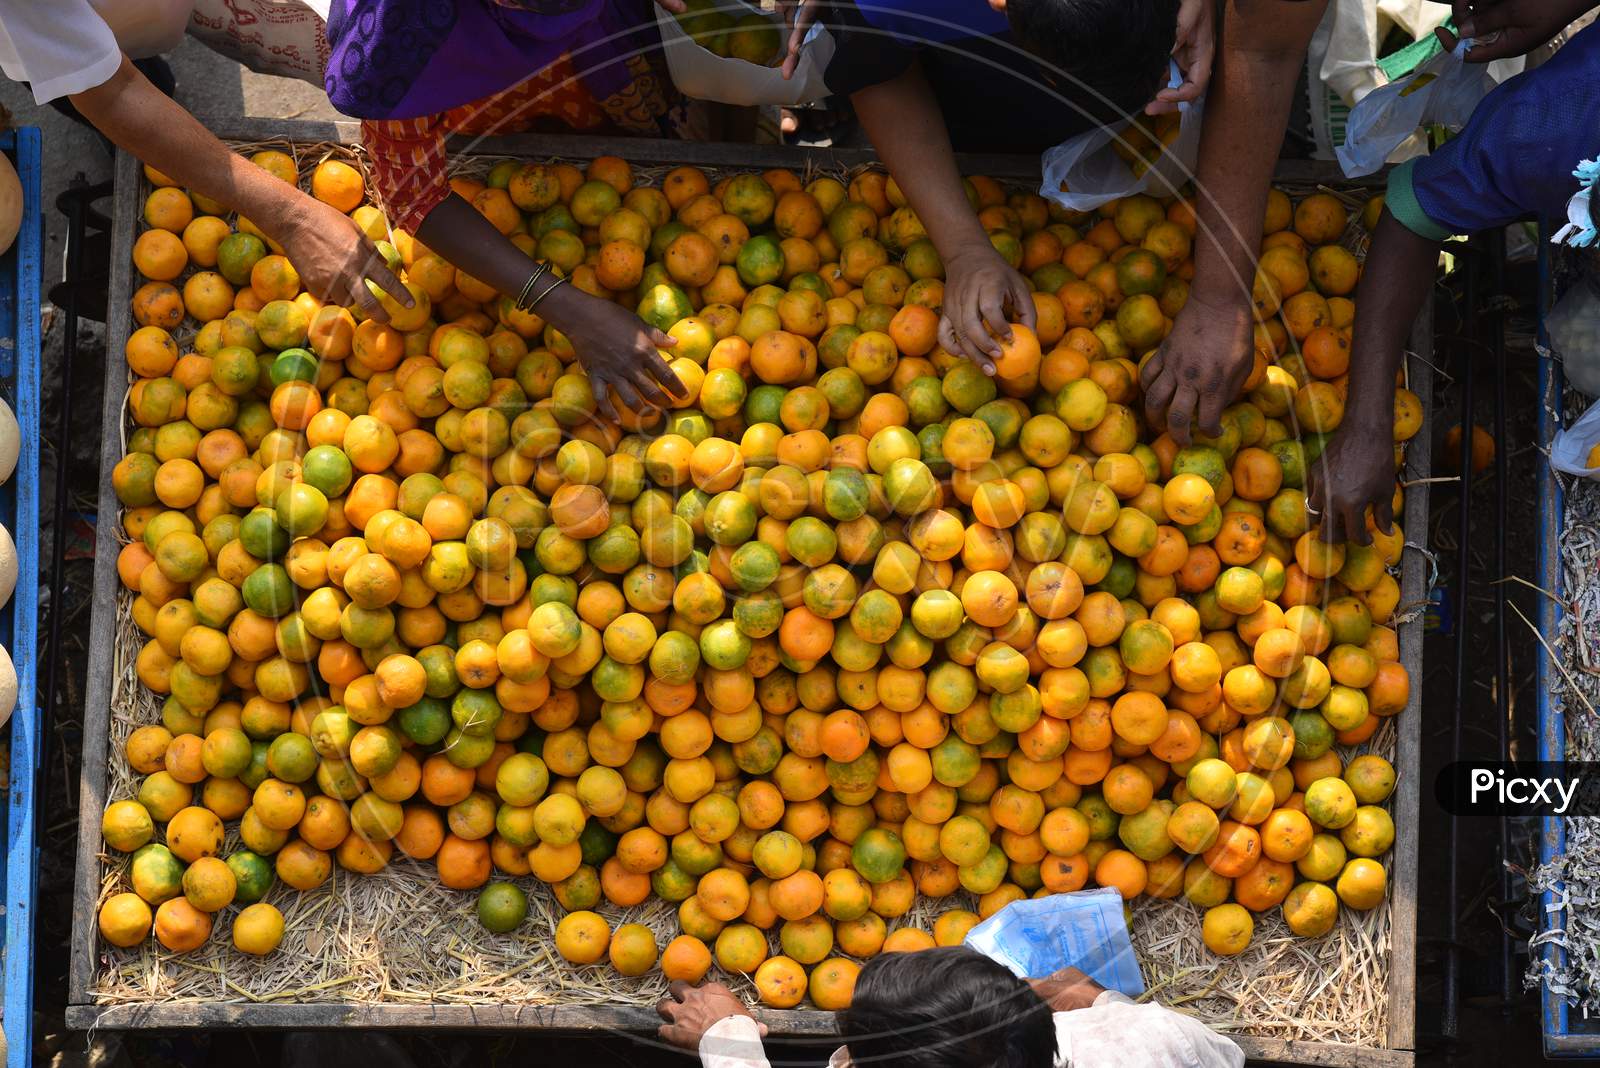 People buy citric acid rich fruits like orange, mausambi fruits to increase their immunity amid corona virus pandemic in Hyderabad